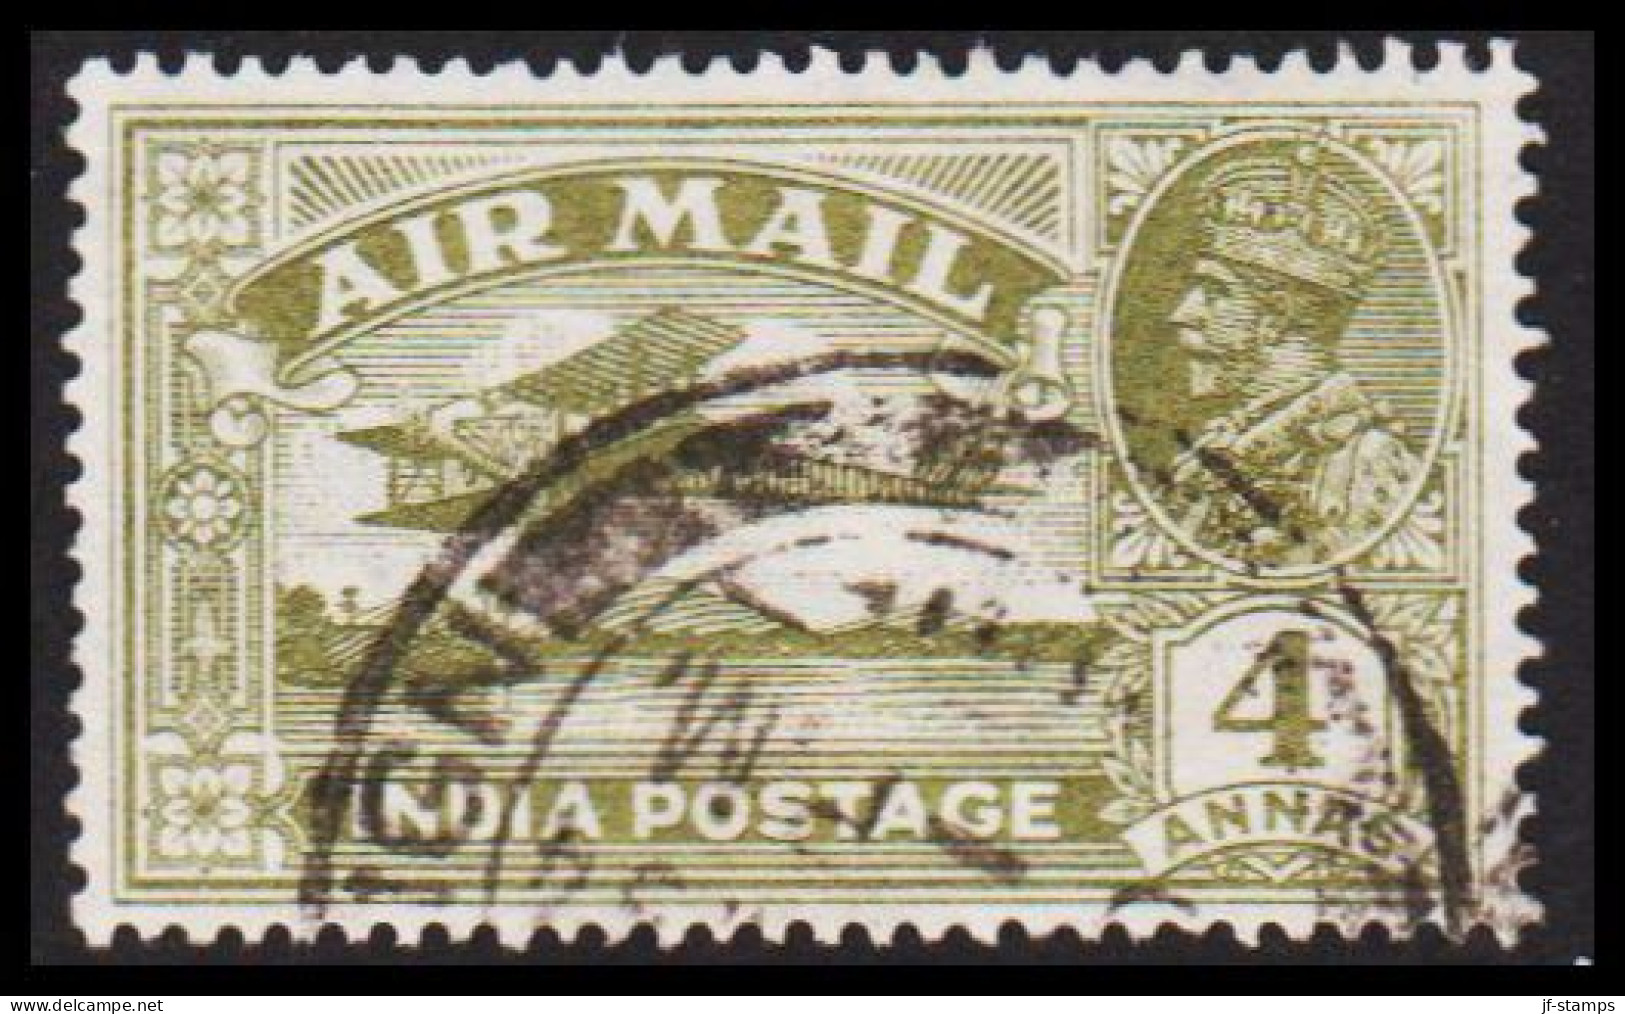 1929. INDIA. Georg V AIR MAIL 4 ANNAS  - JF544374 - 1911-35 King George V